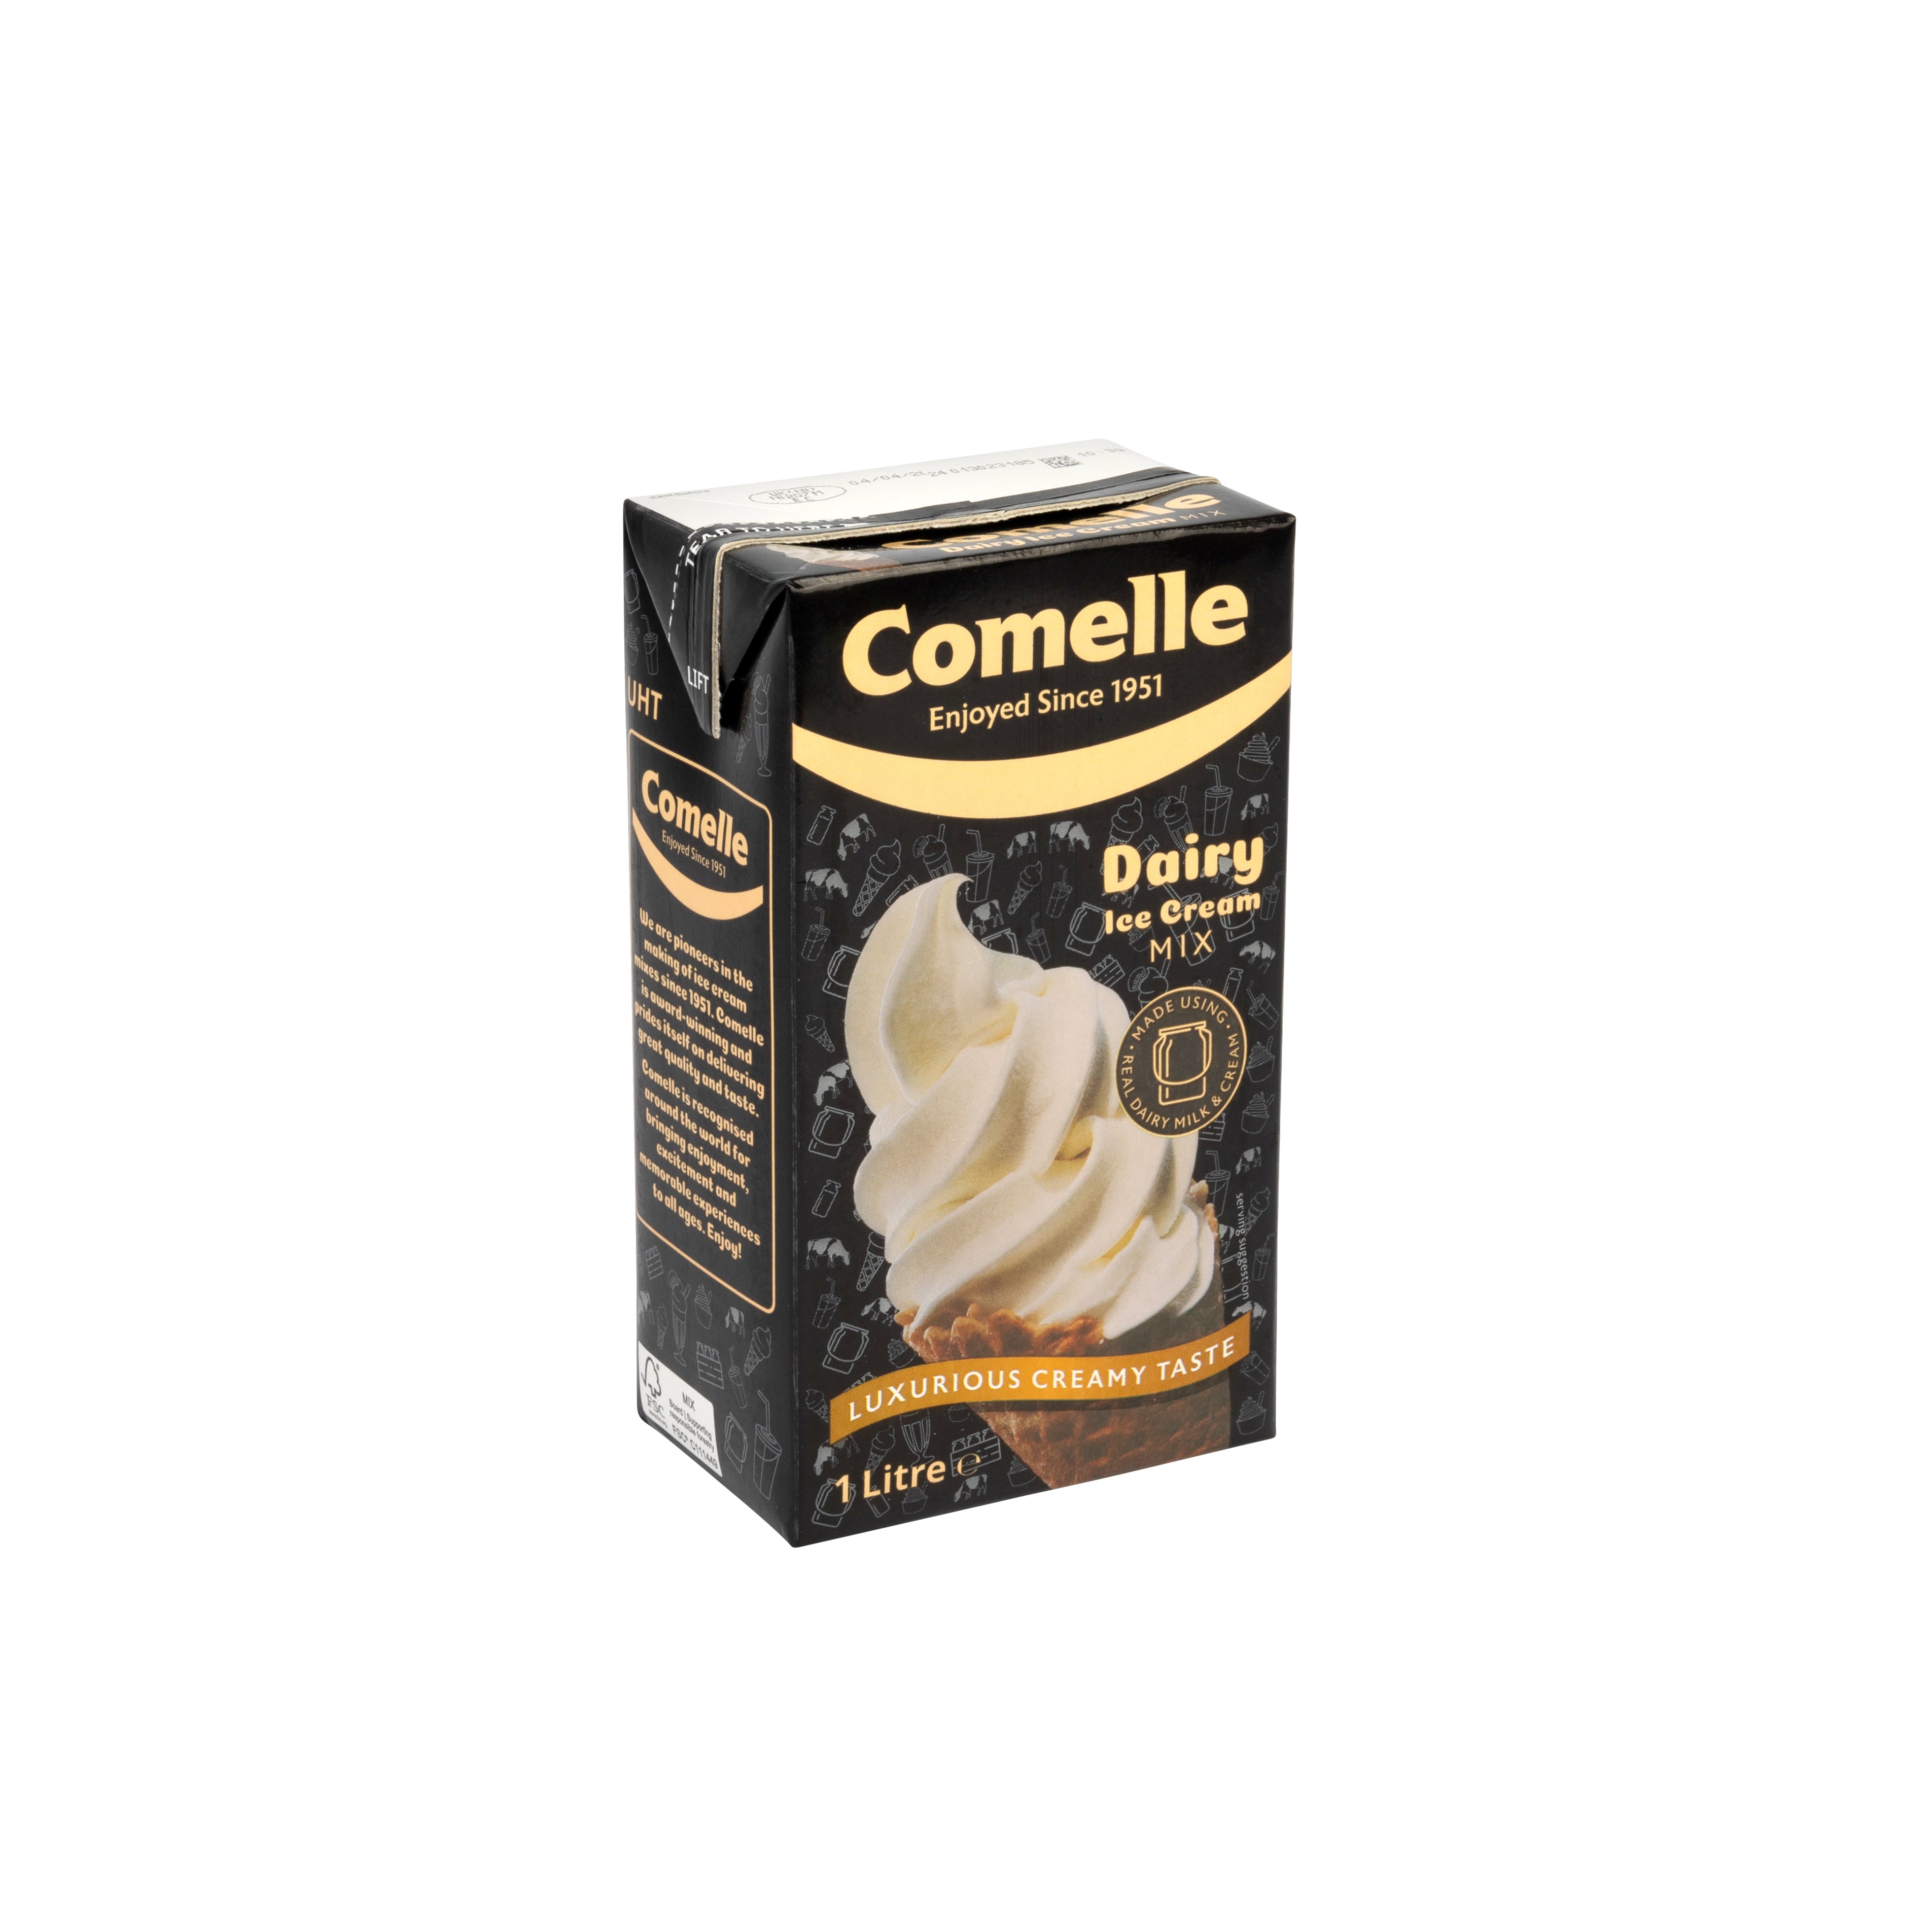 NEW! Comelle Dairy Ice Cream Mix 12 X 1L